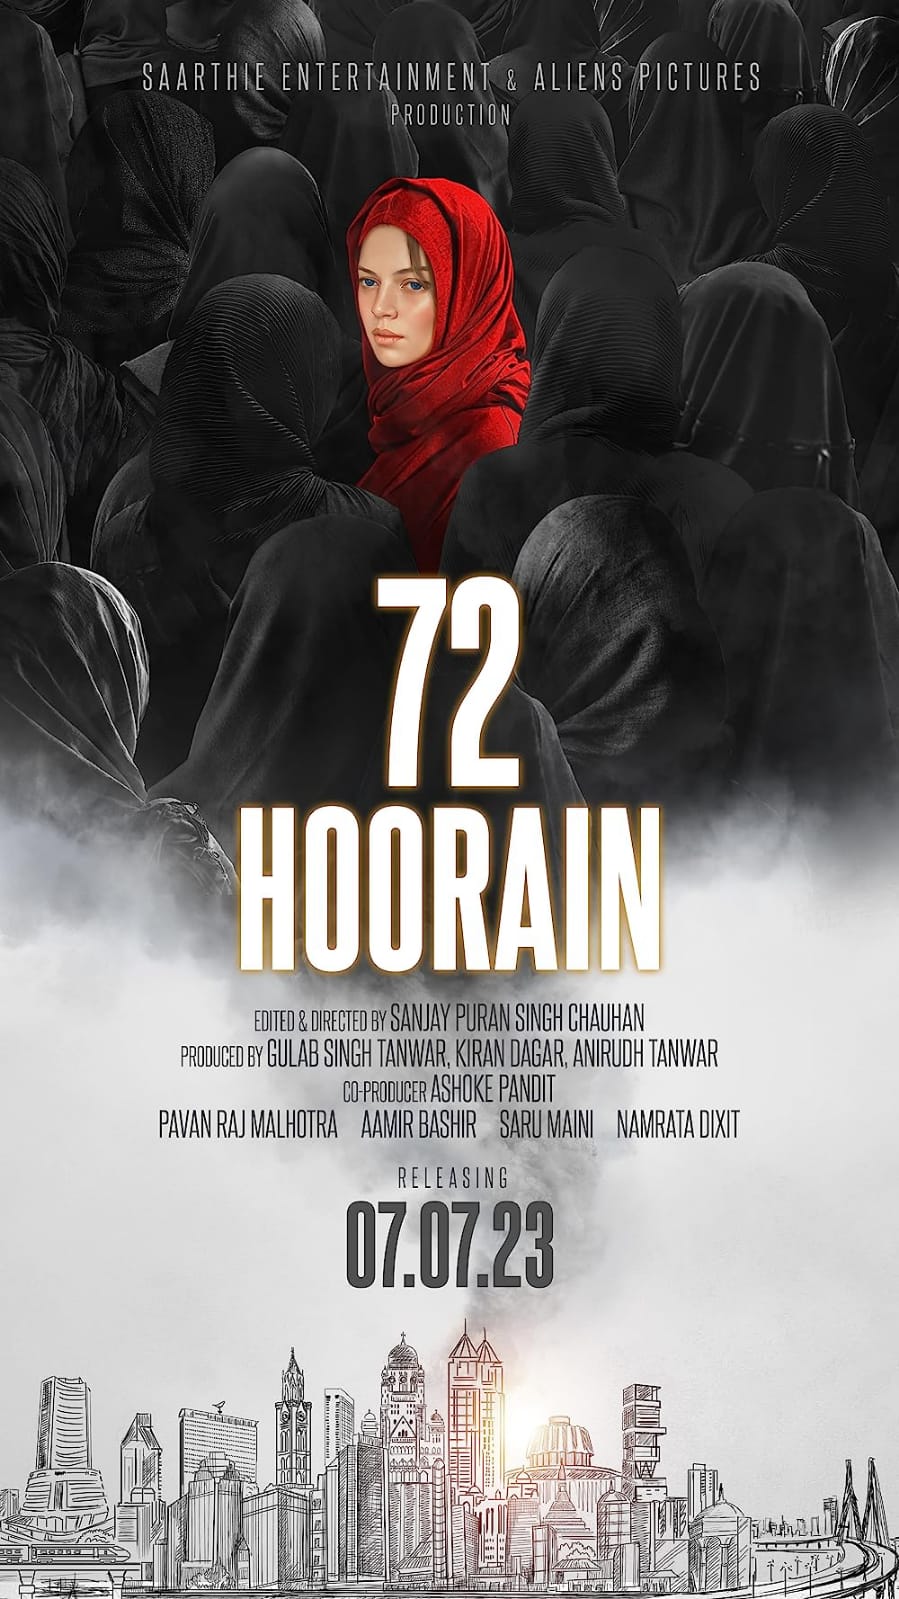 CBFC refuses Censor Certificate to the trailer of “National Award Winning Film 72 Hoorain “